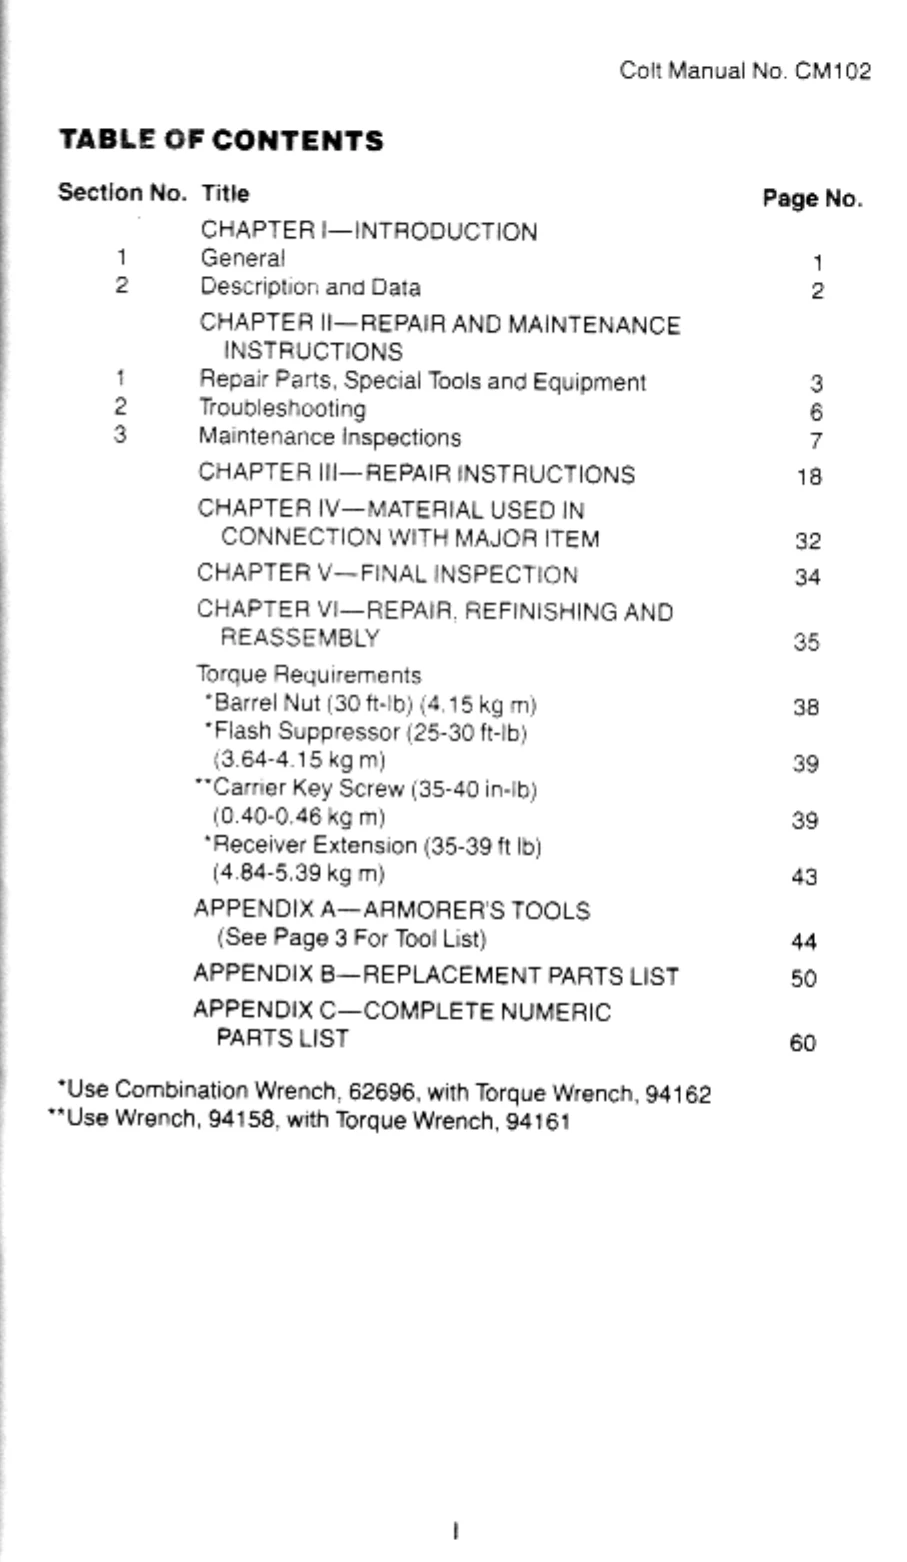 M16A1 Rifle Armorer Depot Maintenance and Repair Manual